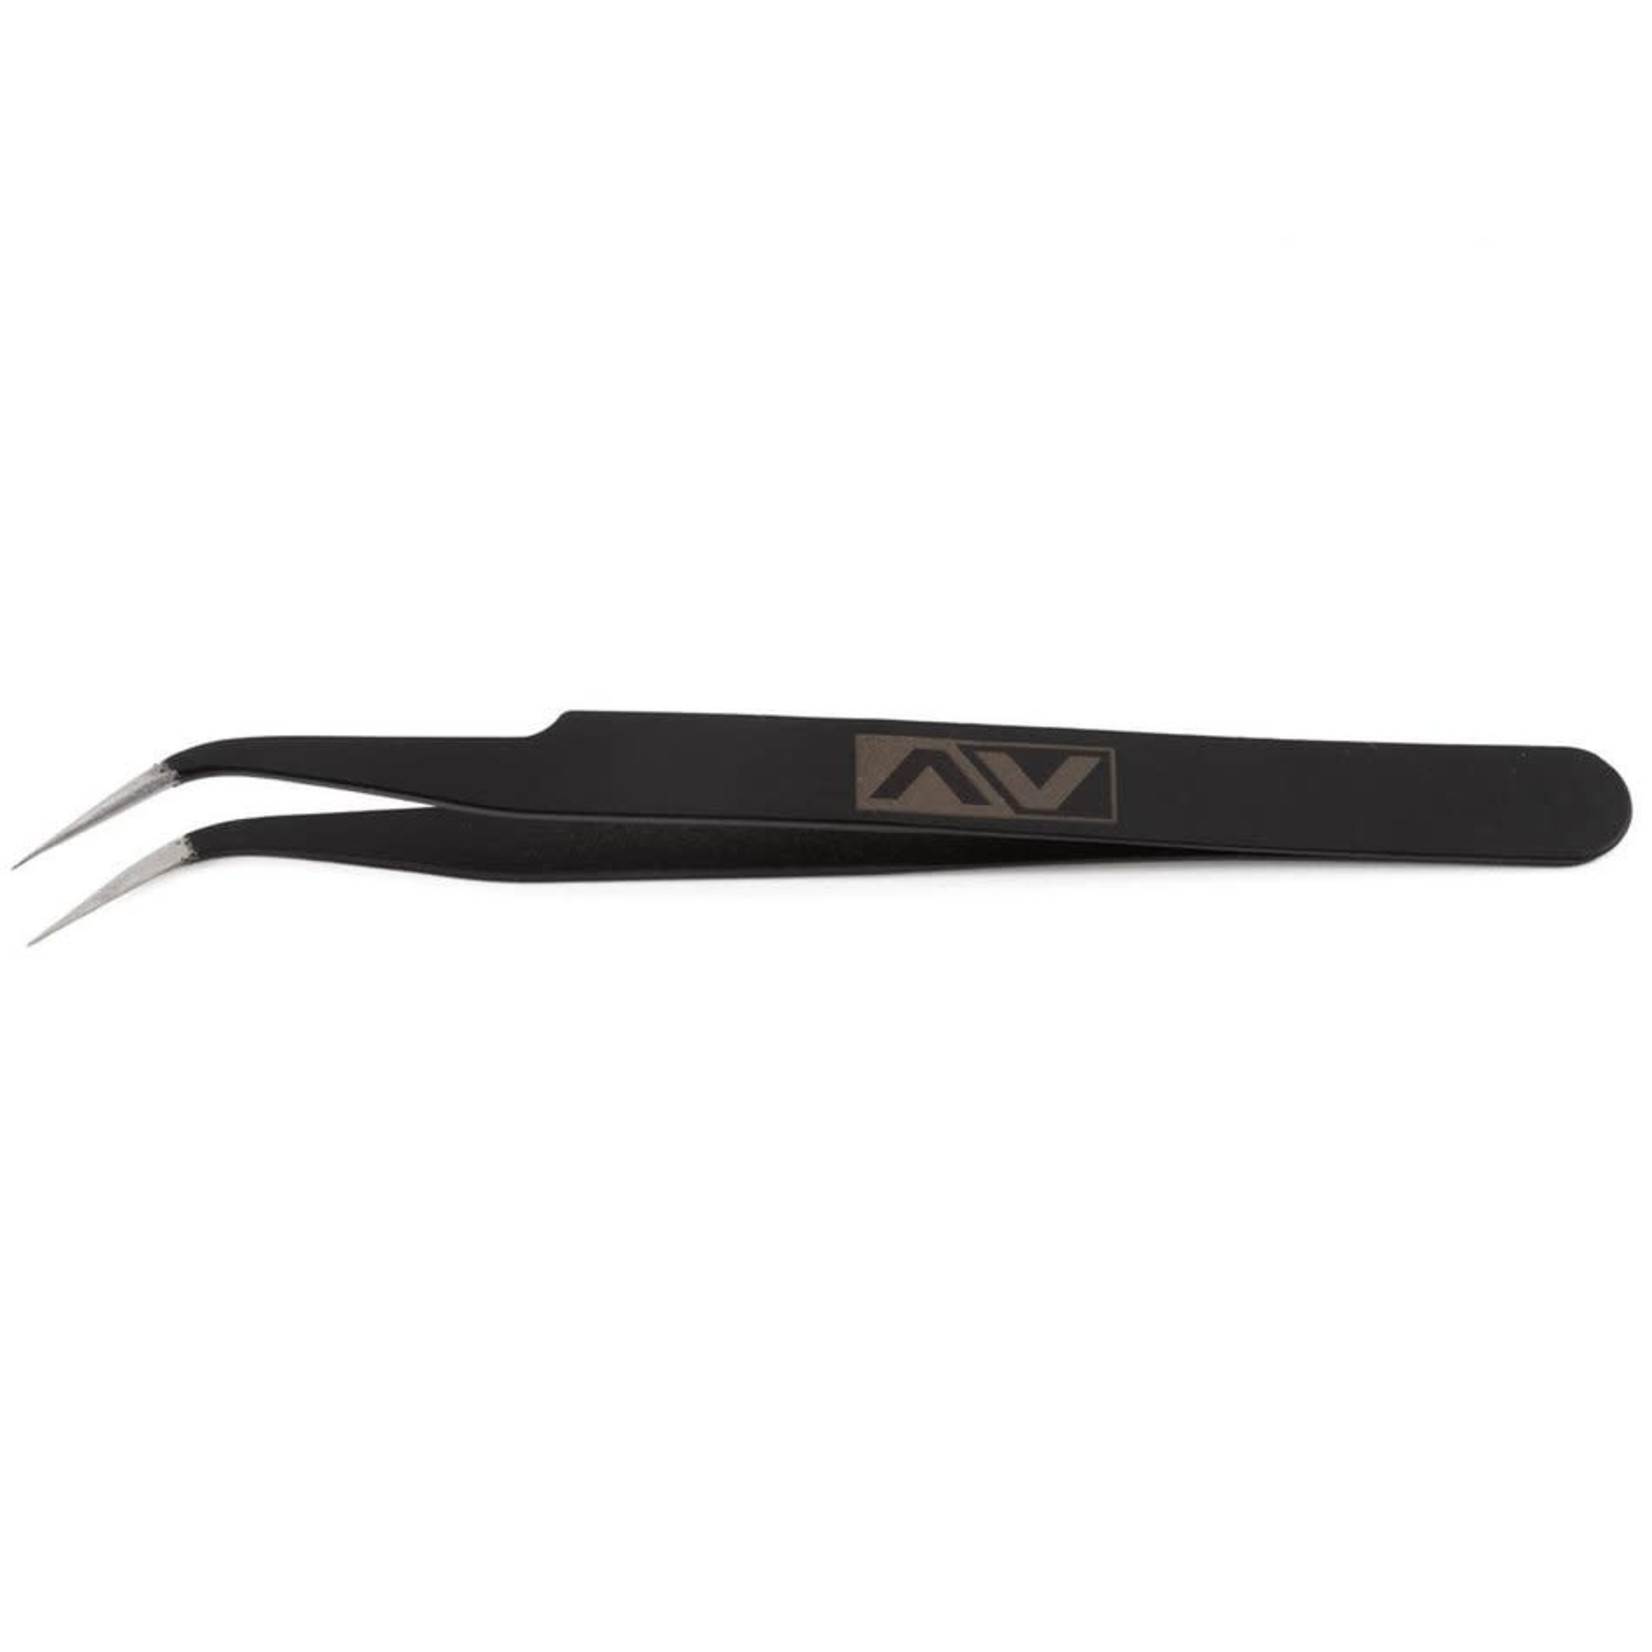 Avid RC Avid RC Curved Tweezers #AV10086-C